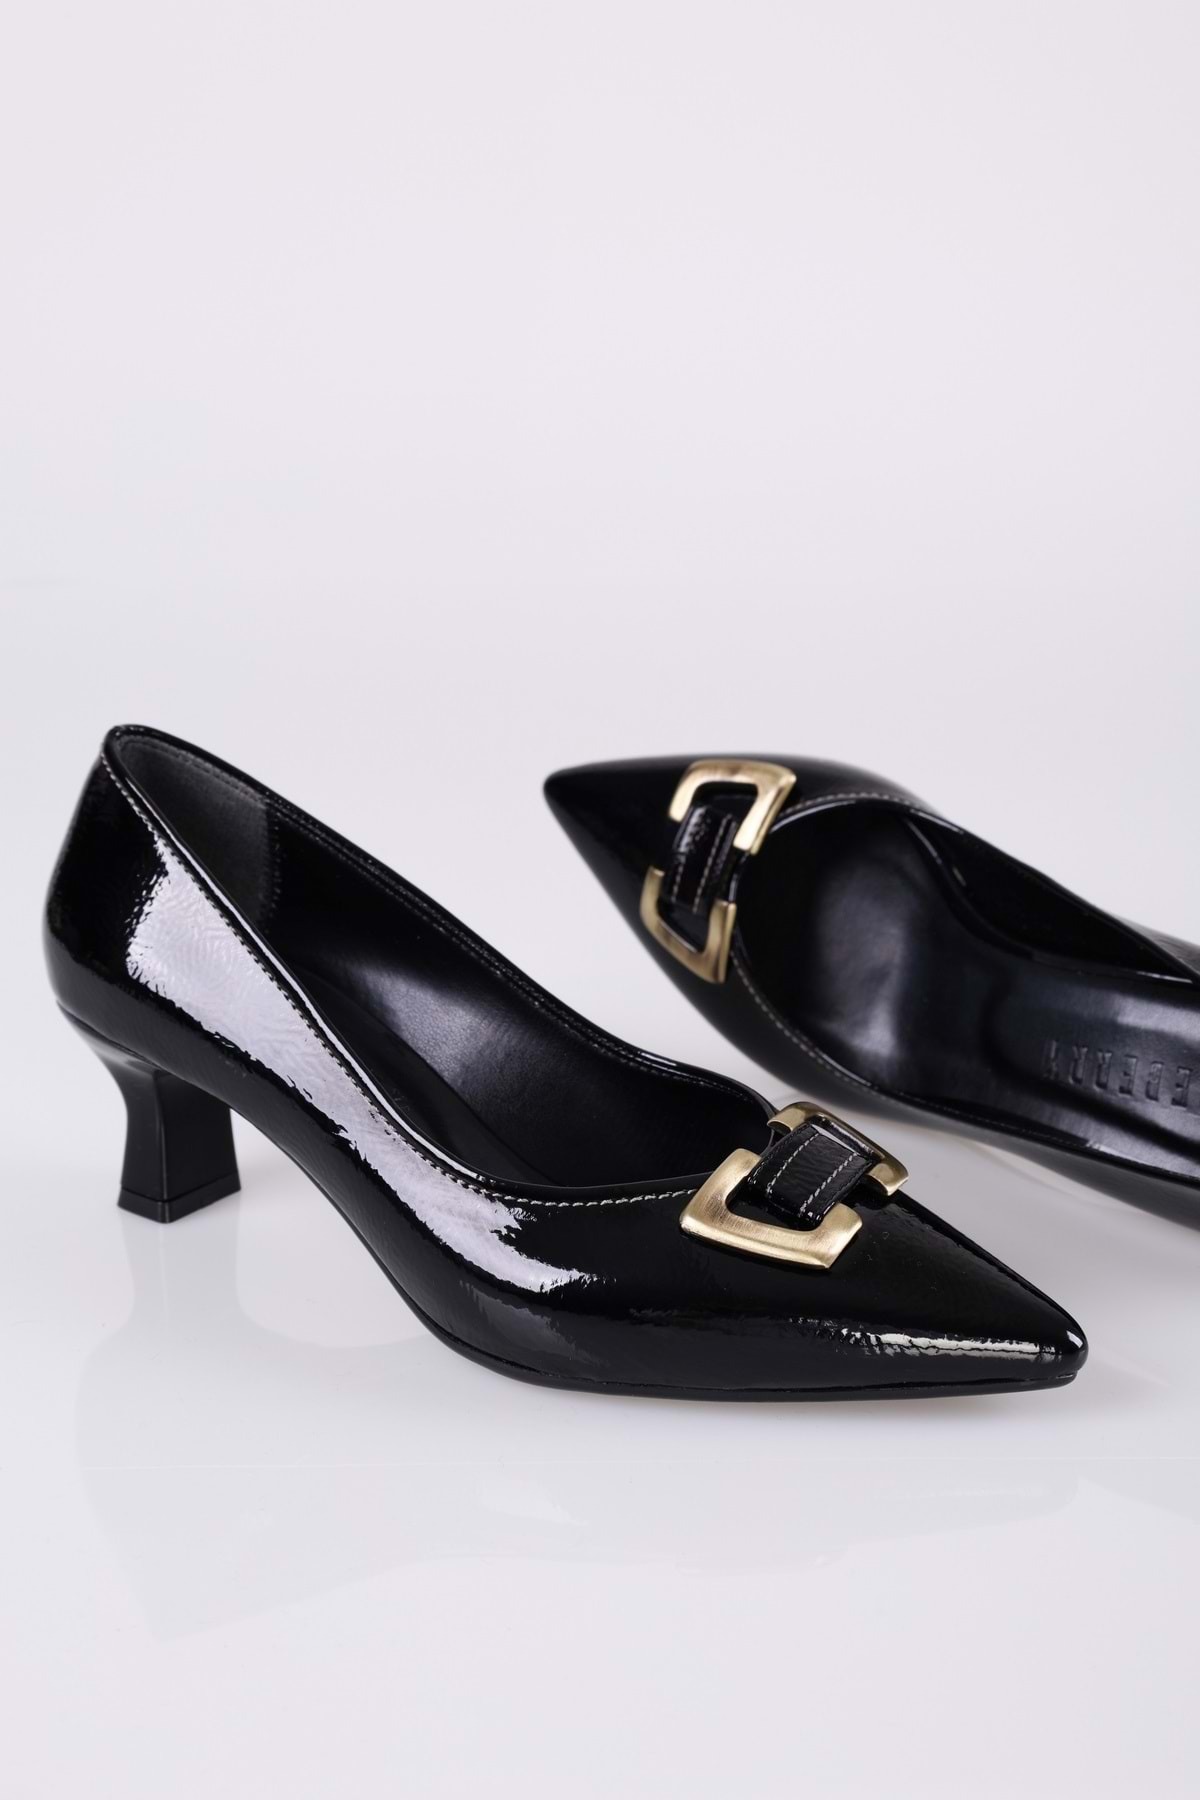 Levně Shoeberry Women's Rover Black Patent Leather Heeled Shoes Stiletto